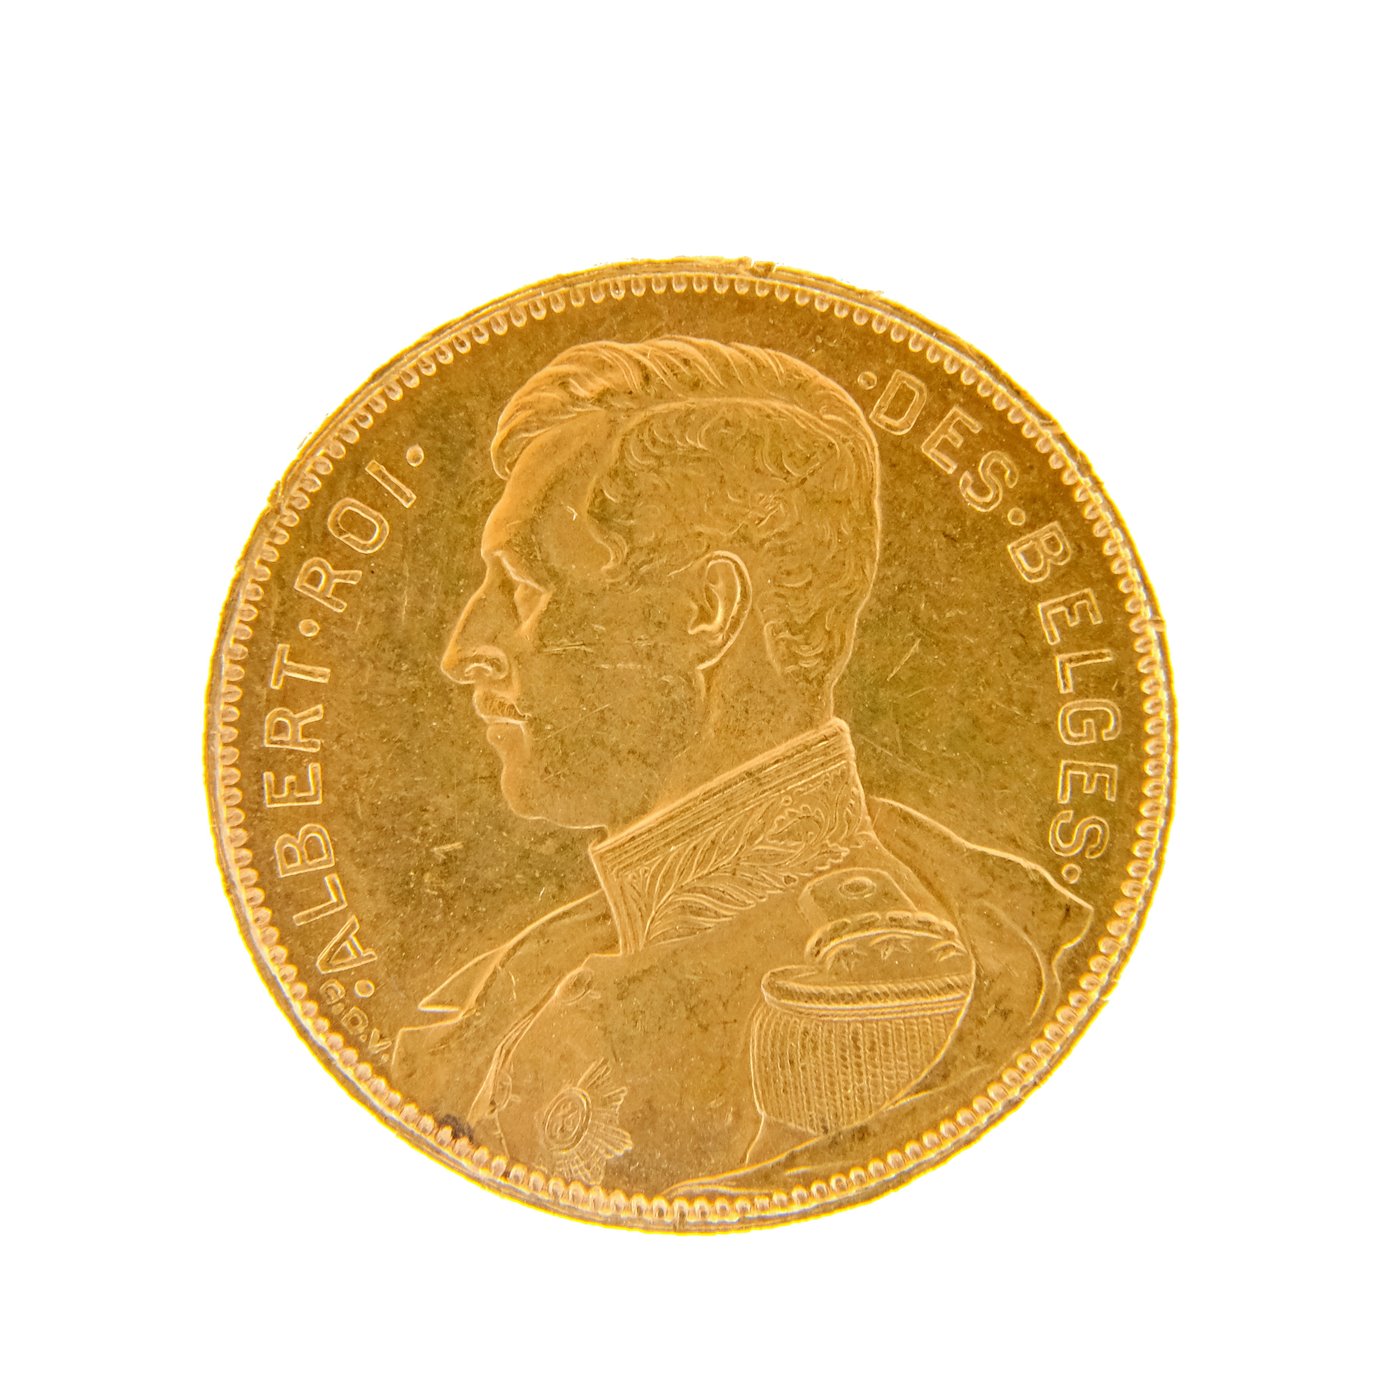 .. - Belgie zlatý 20 frank ALBERT I. 1914, zlato 900/1000, hrubá hmotnost 6,45